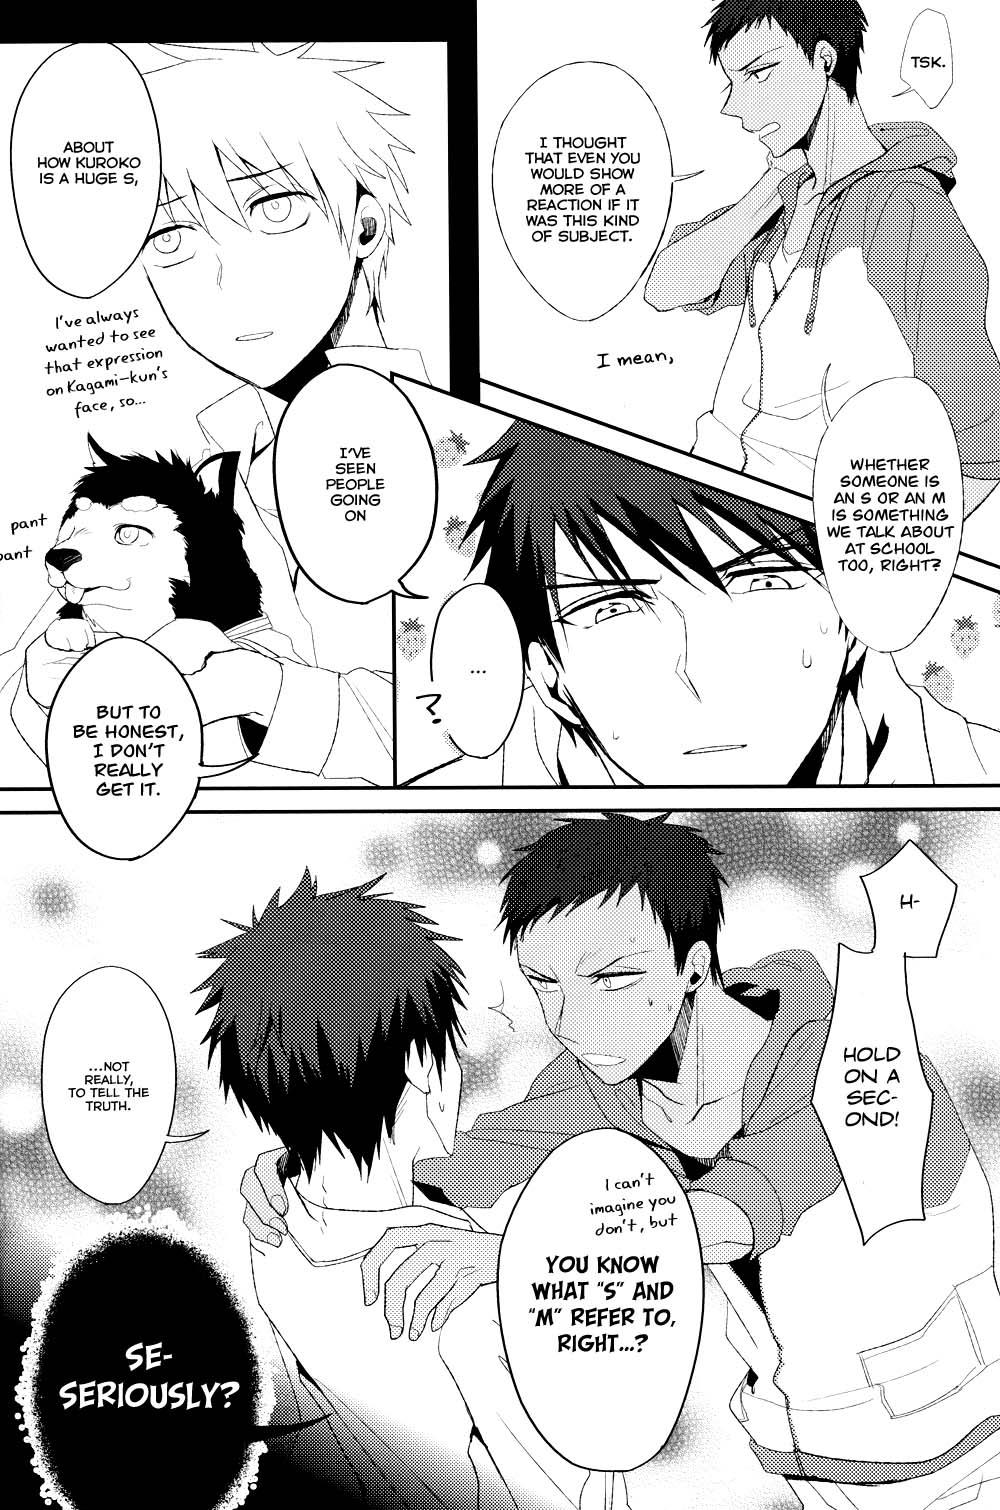 Homo Dont you have an aptitude for this? - Kuroko no basuke 18 Year Old Porn - Page 3